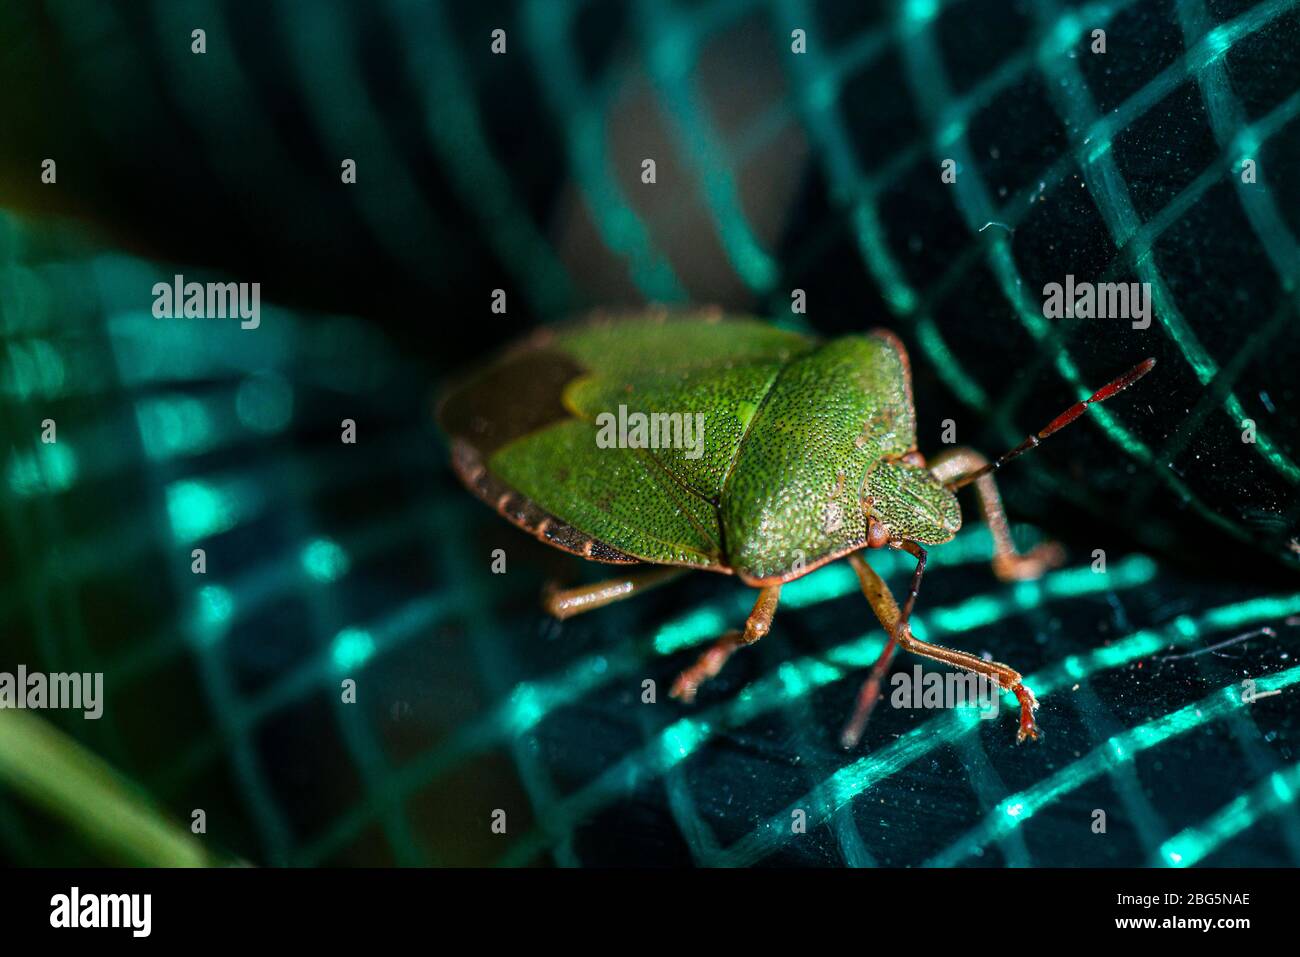 A green shield bug (Palomena prasina) on a coiled up hosepipe Stock Photo